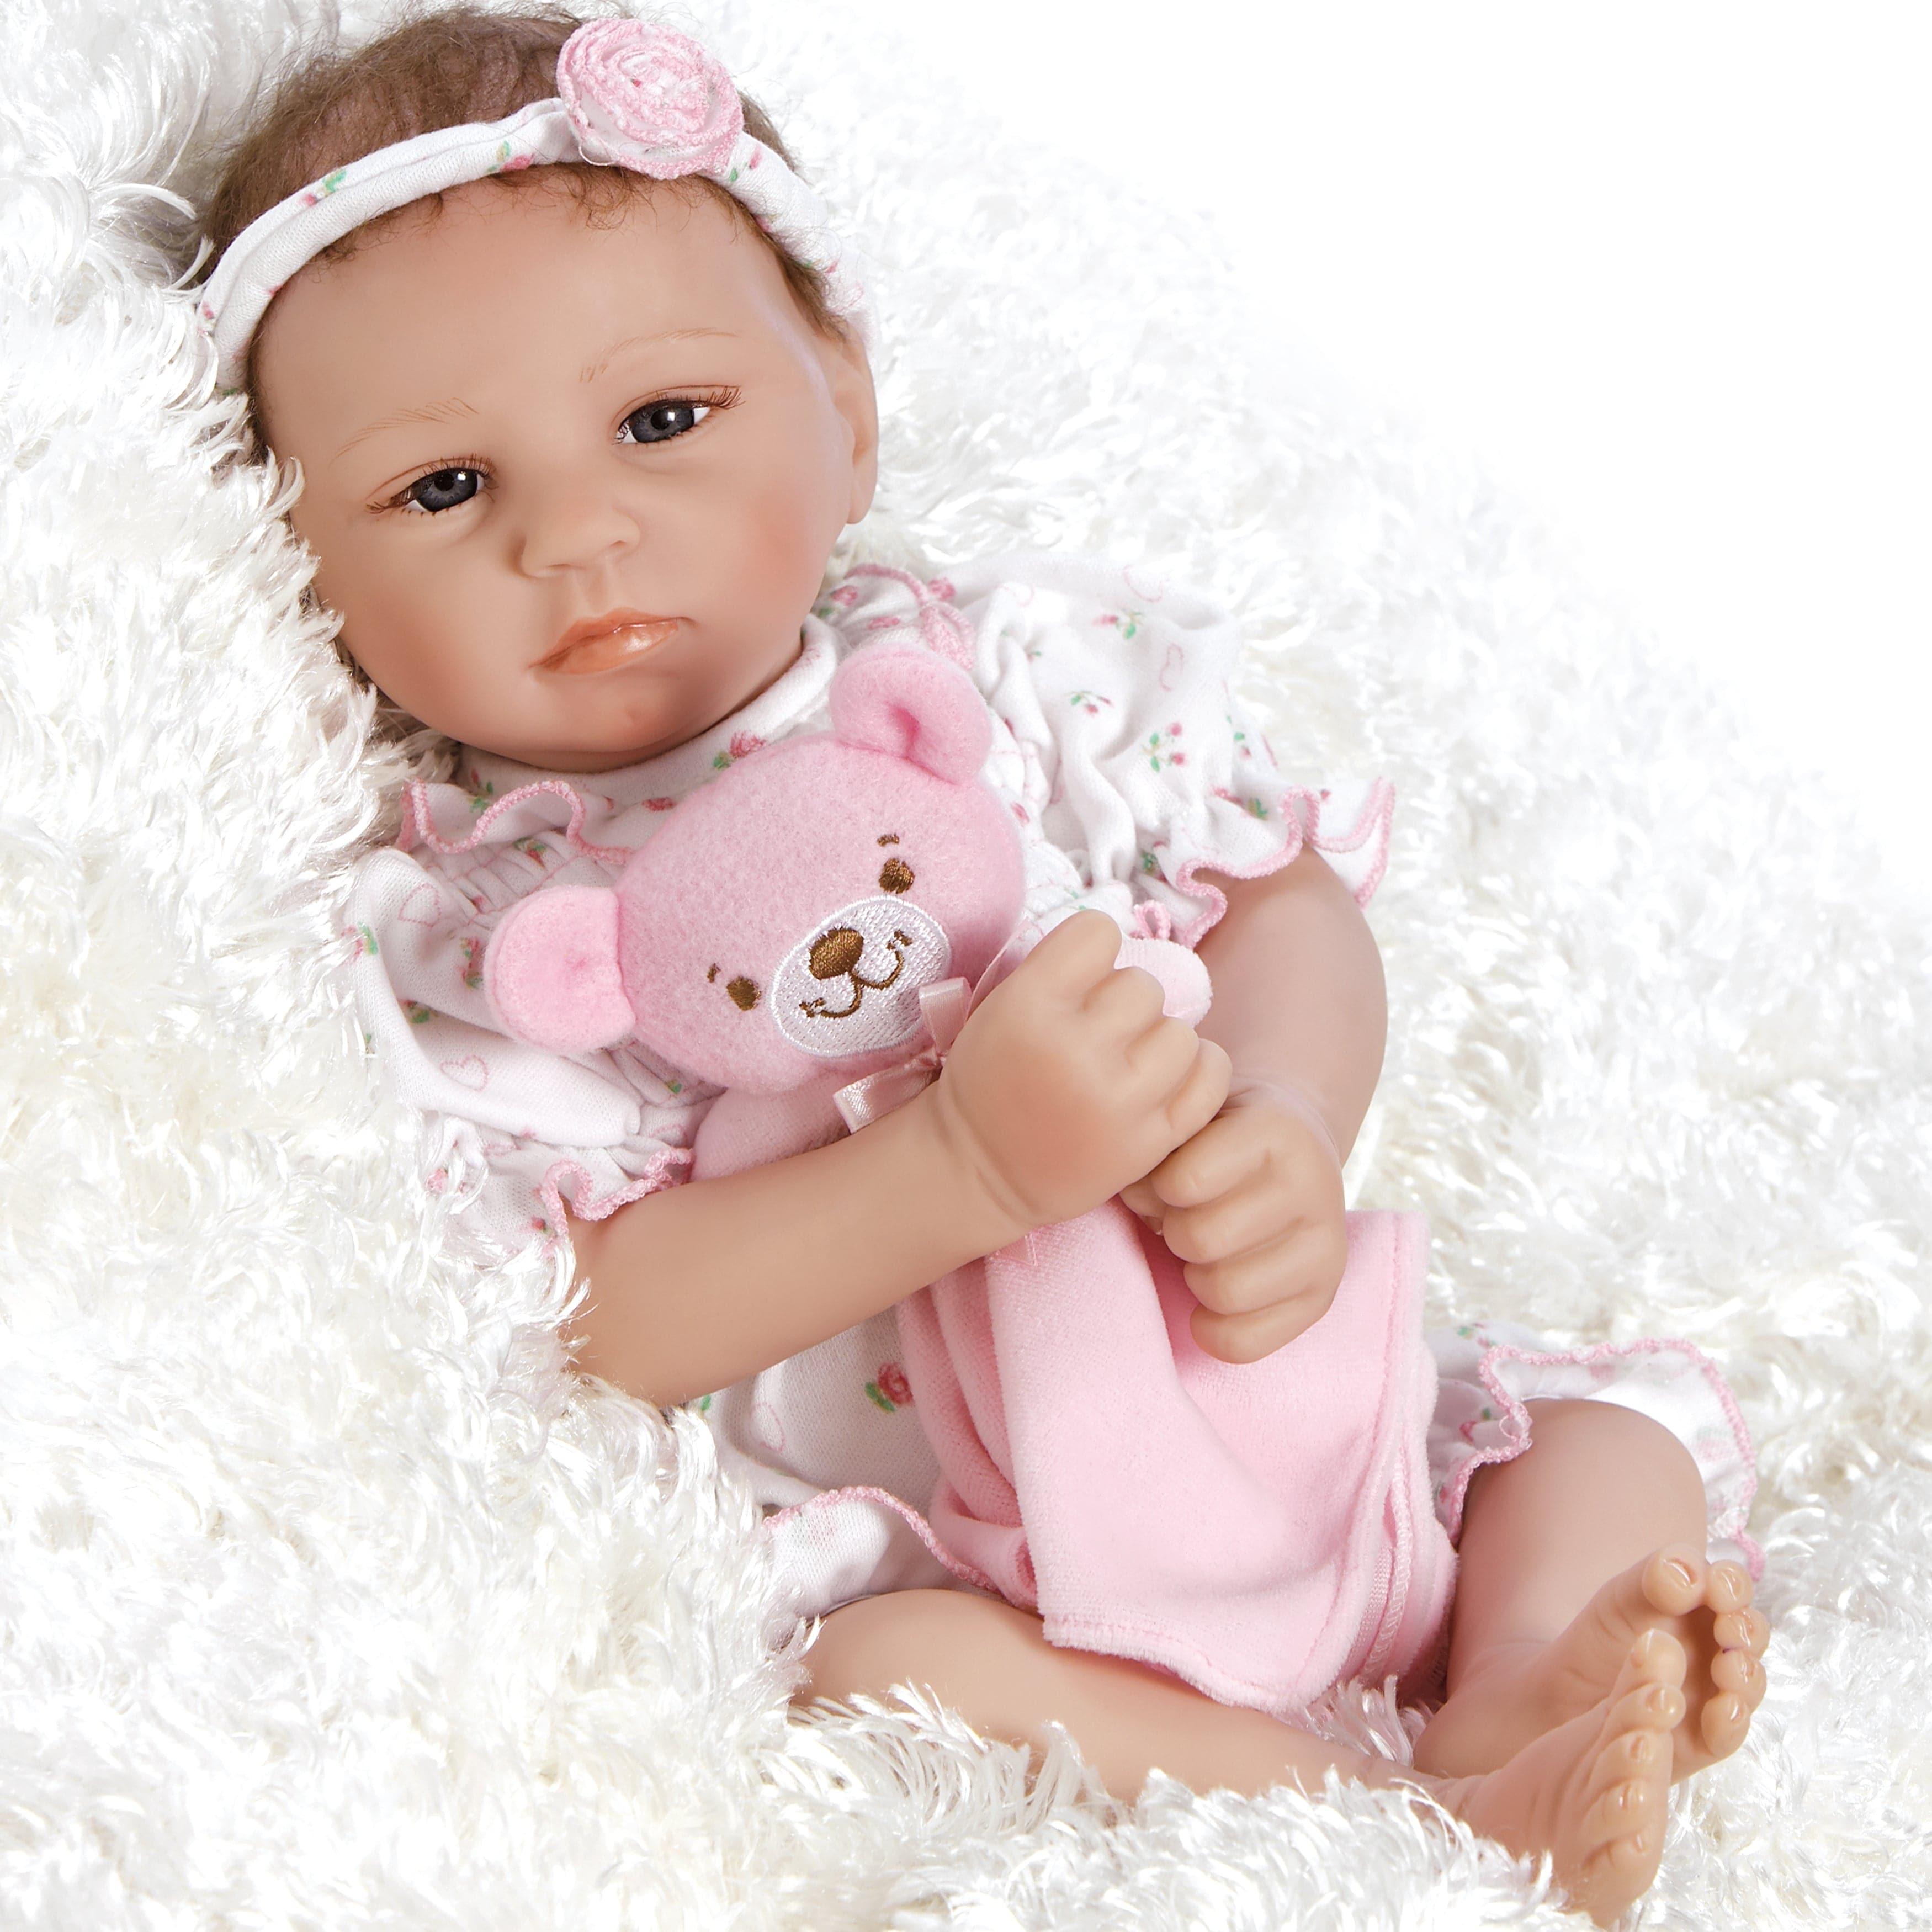 Realistic Infant Newborn Doll, Bundle of Joy, Soft Vinyl, 17.5 inch Paradise Galleries Reborn